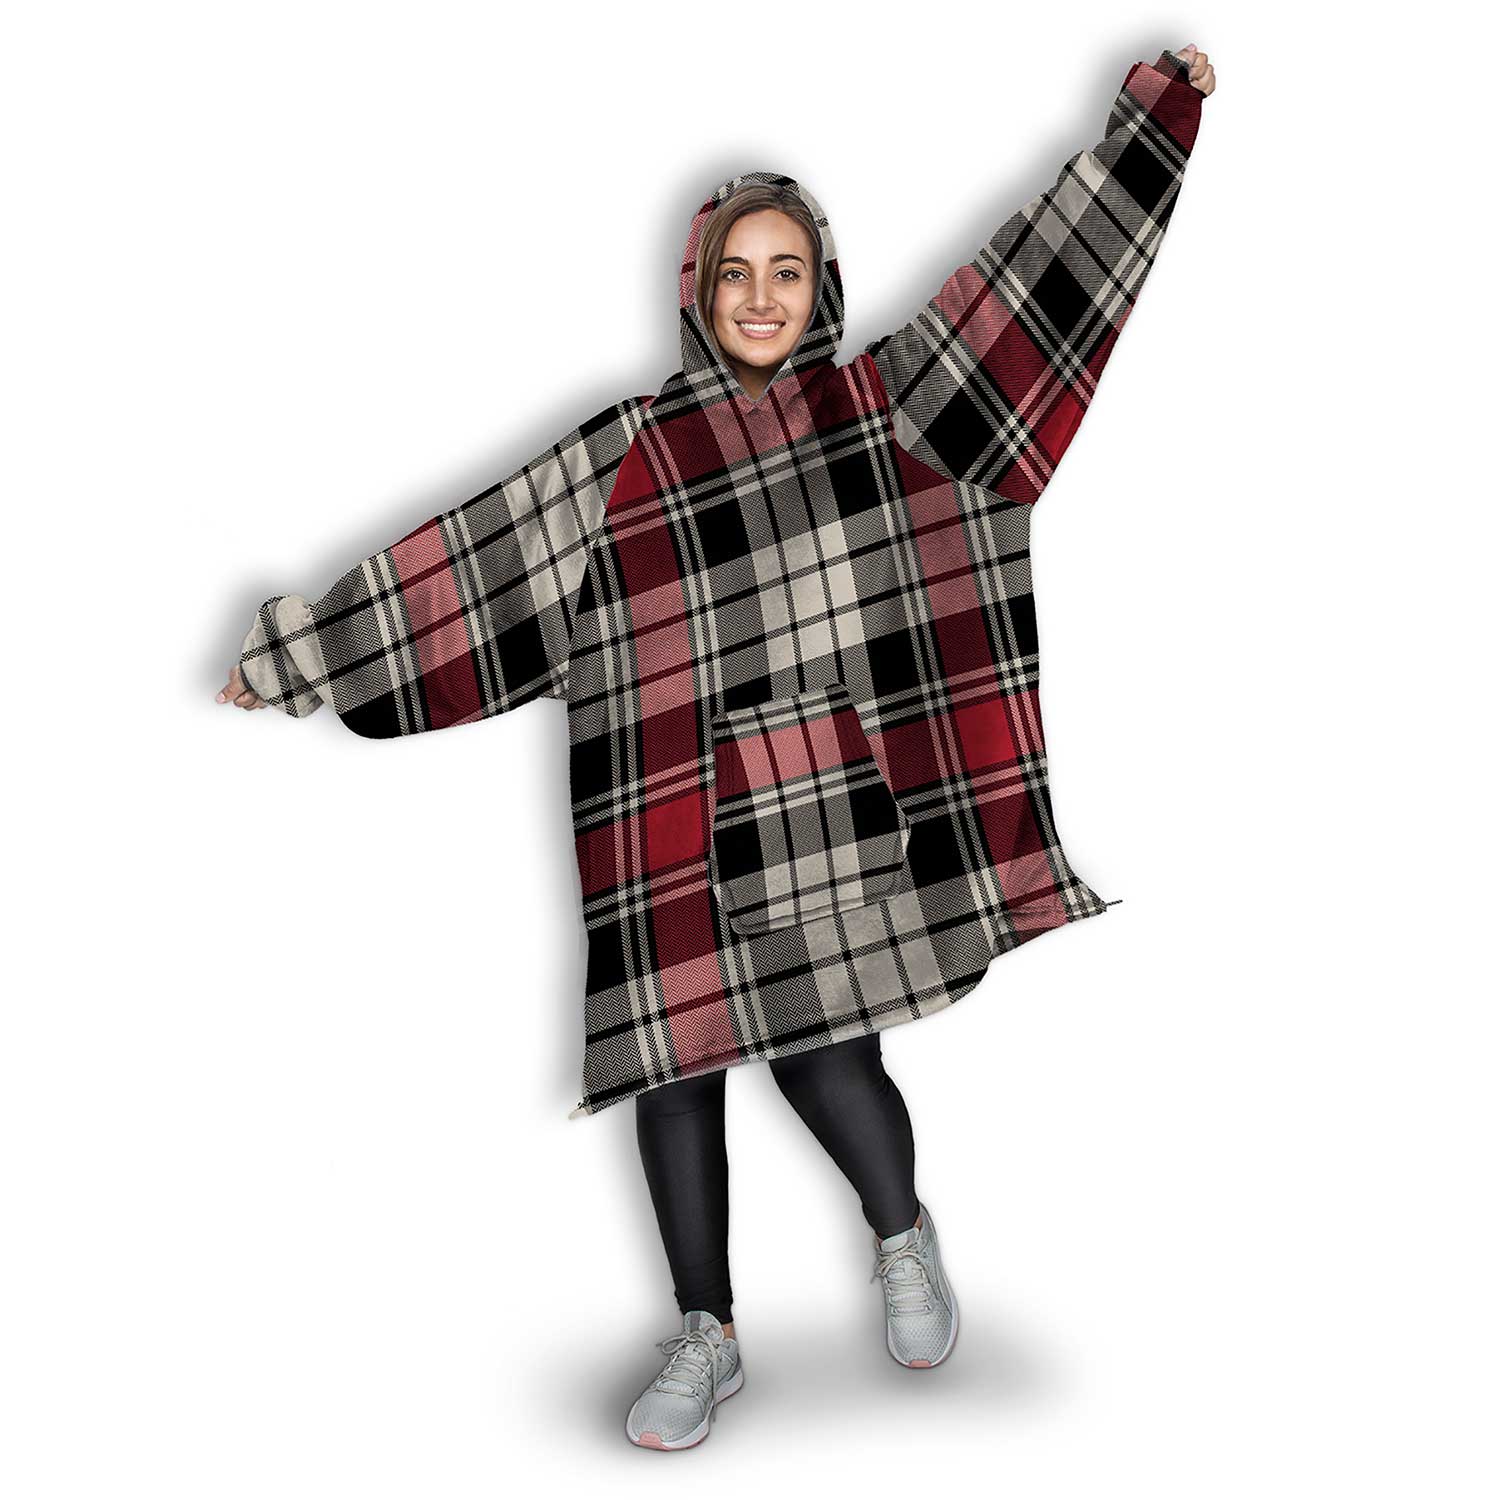 Oversized, unisex sherpa hooded sweater blanket, 32"X37" - Cabin plaid